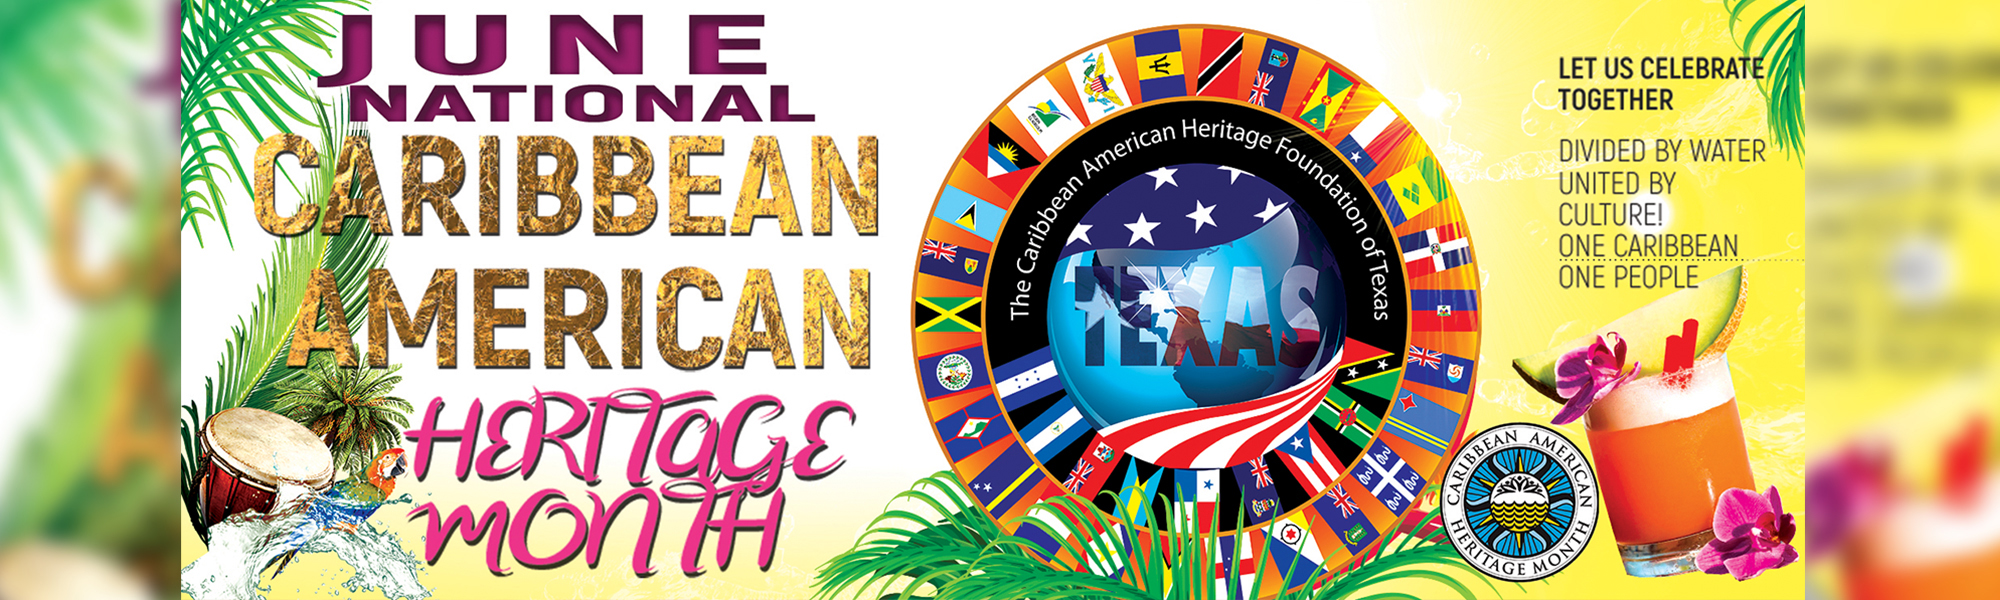 Celebrate June - National Caribbean-American Heritage Month